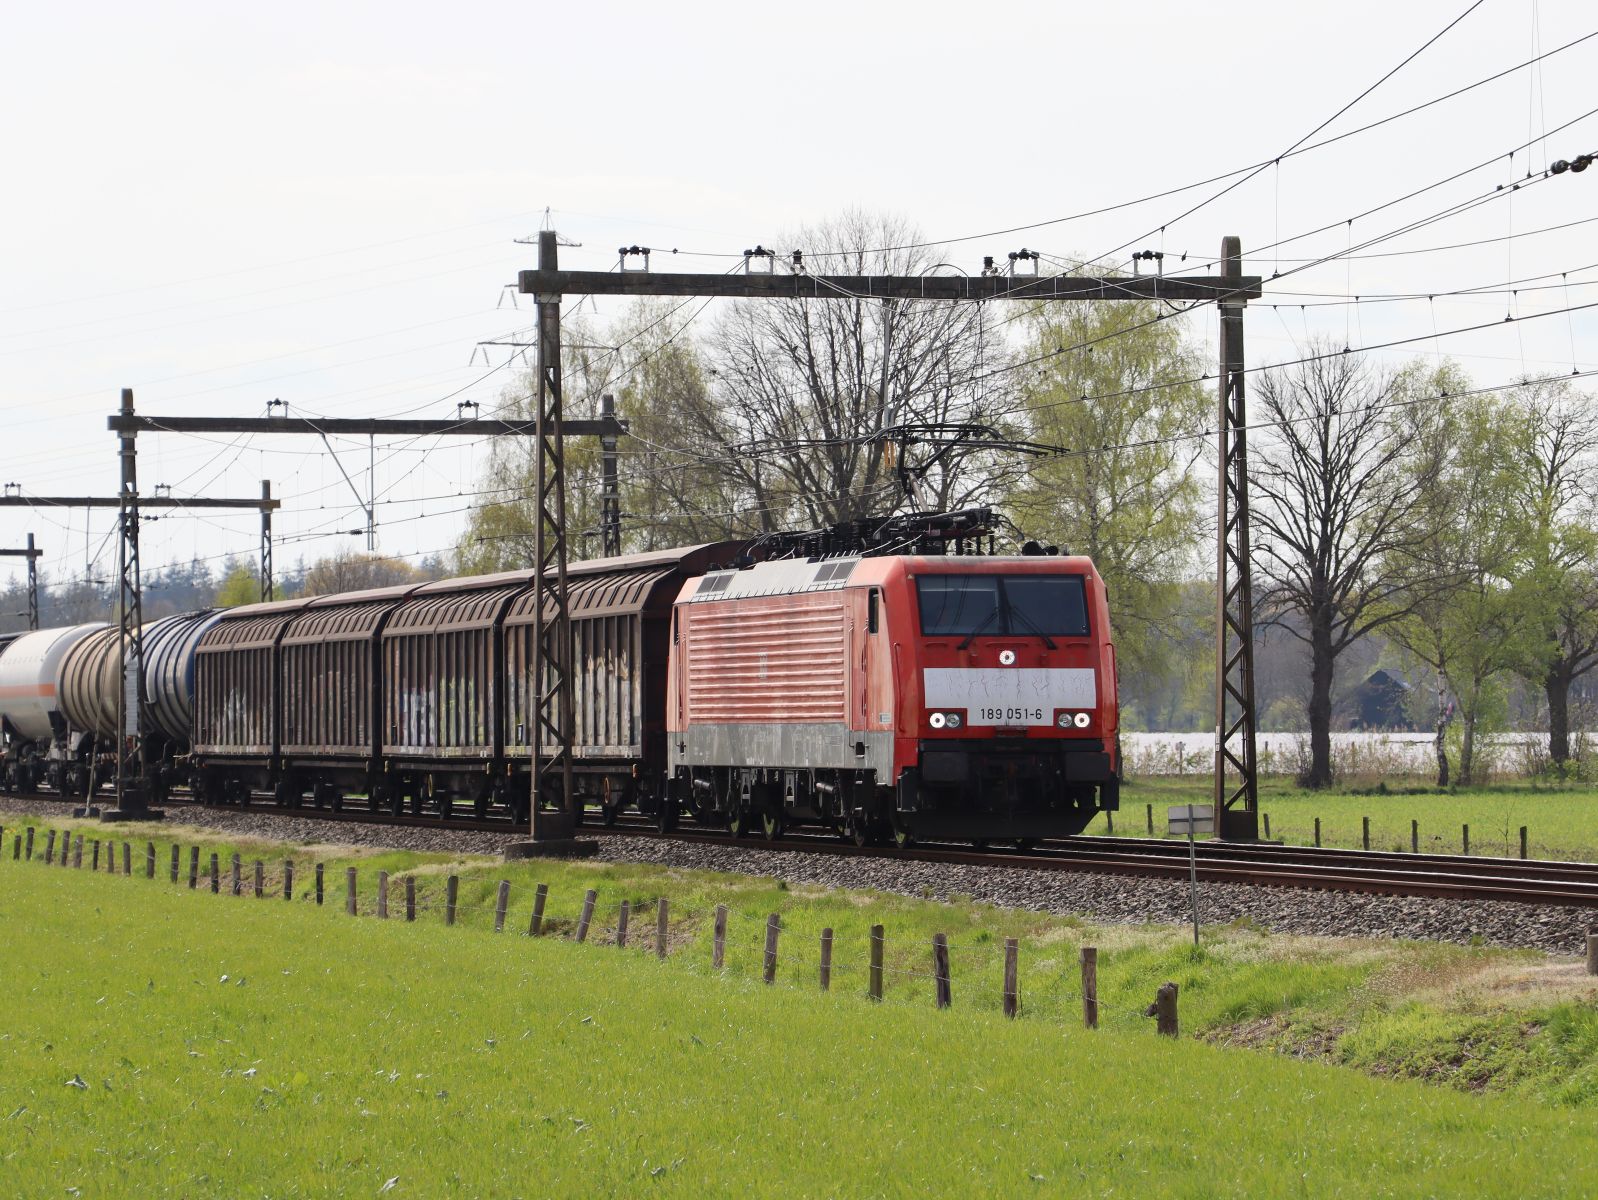 DB Cargo Lokomotive 189 051-6 bei Bahnbergang Zanddijk, Rijssen 27-04-2023.

DB Cargo locomotief 189 051-6 bij overweg Zanddijk, Rijssen 27-04-2023.